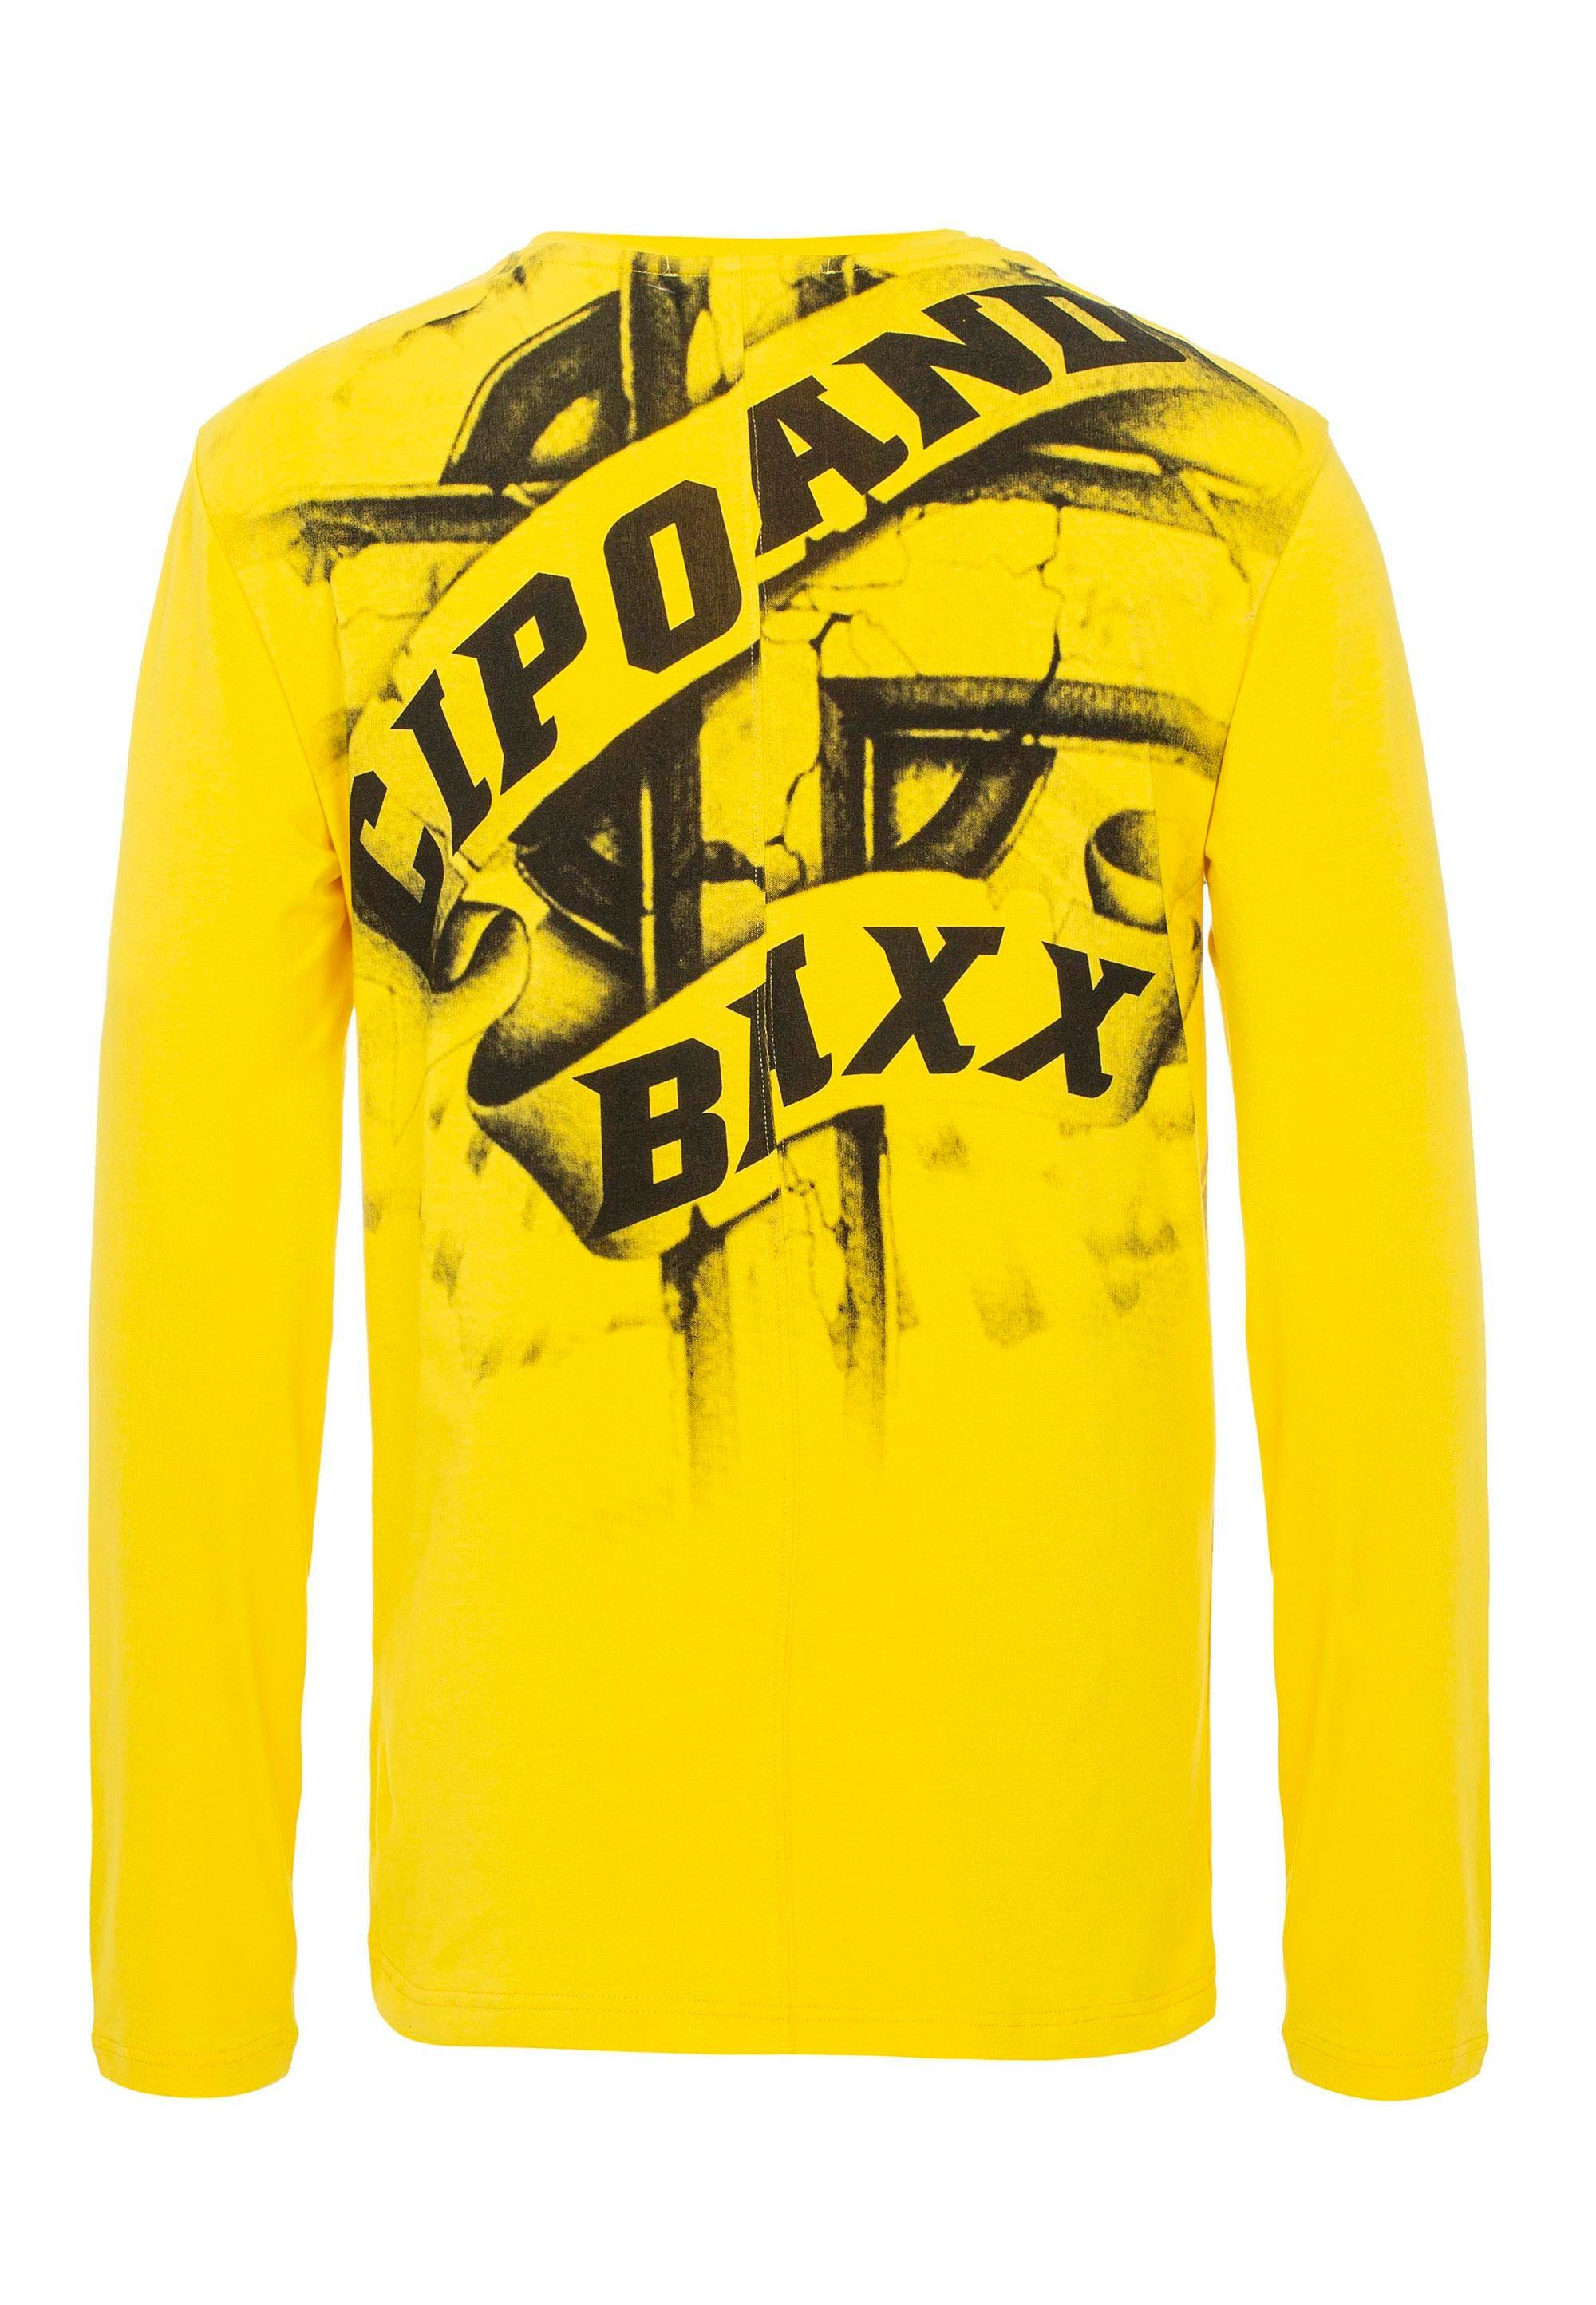 Cipo & Baxx Langarmshirt in Look gelb coolem